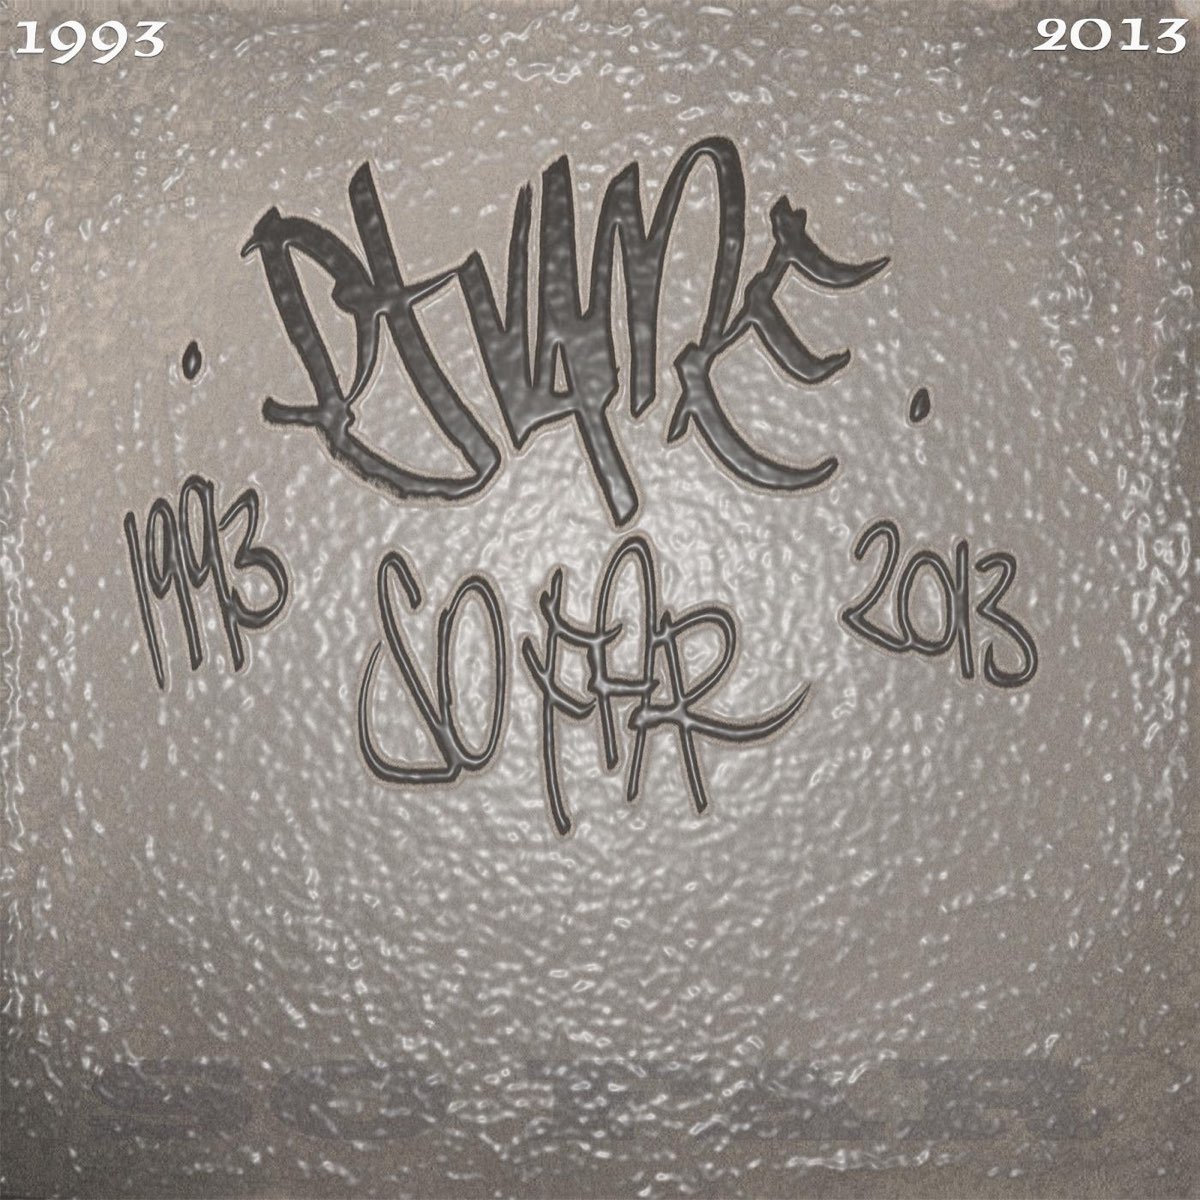 2013 1993. Def. - Again (feat. Leon). Holy Sinner.